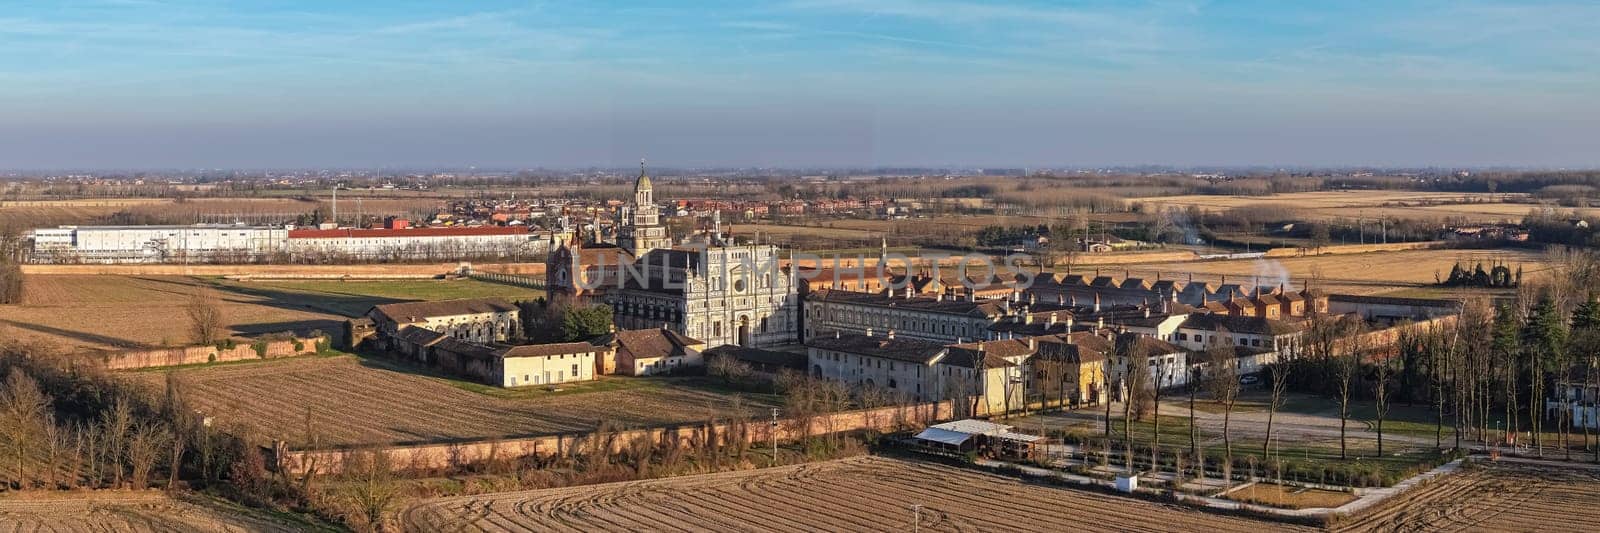 Landscape shot of Certosa of Pavia monastery and sanctuary by Robertobinetti70